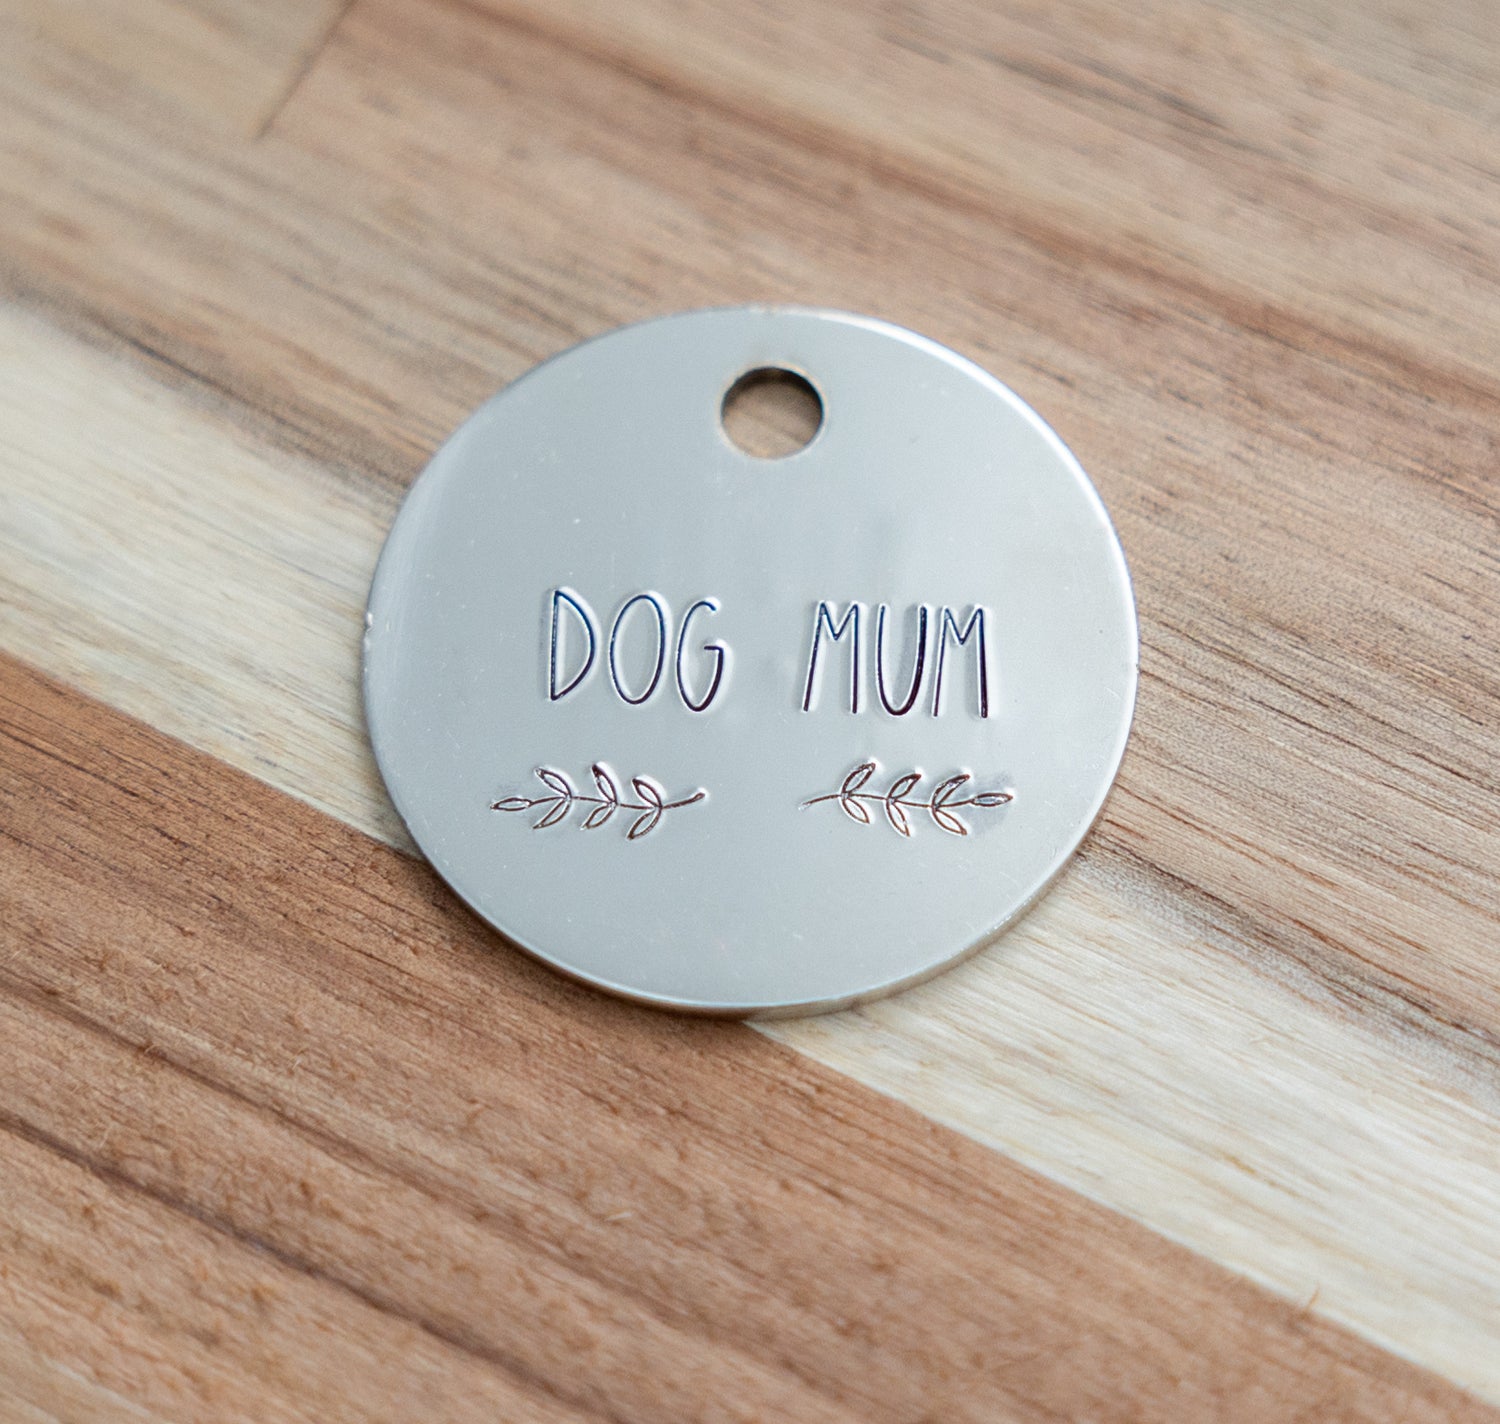 Dog Mum/Dog Dad Key Chain